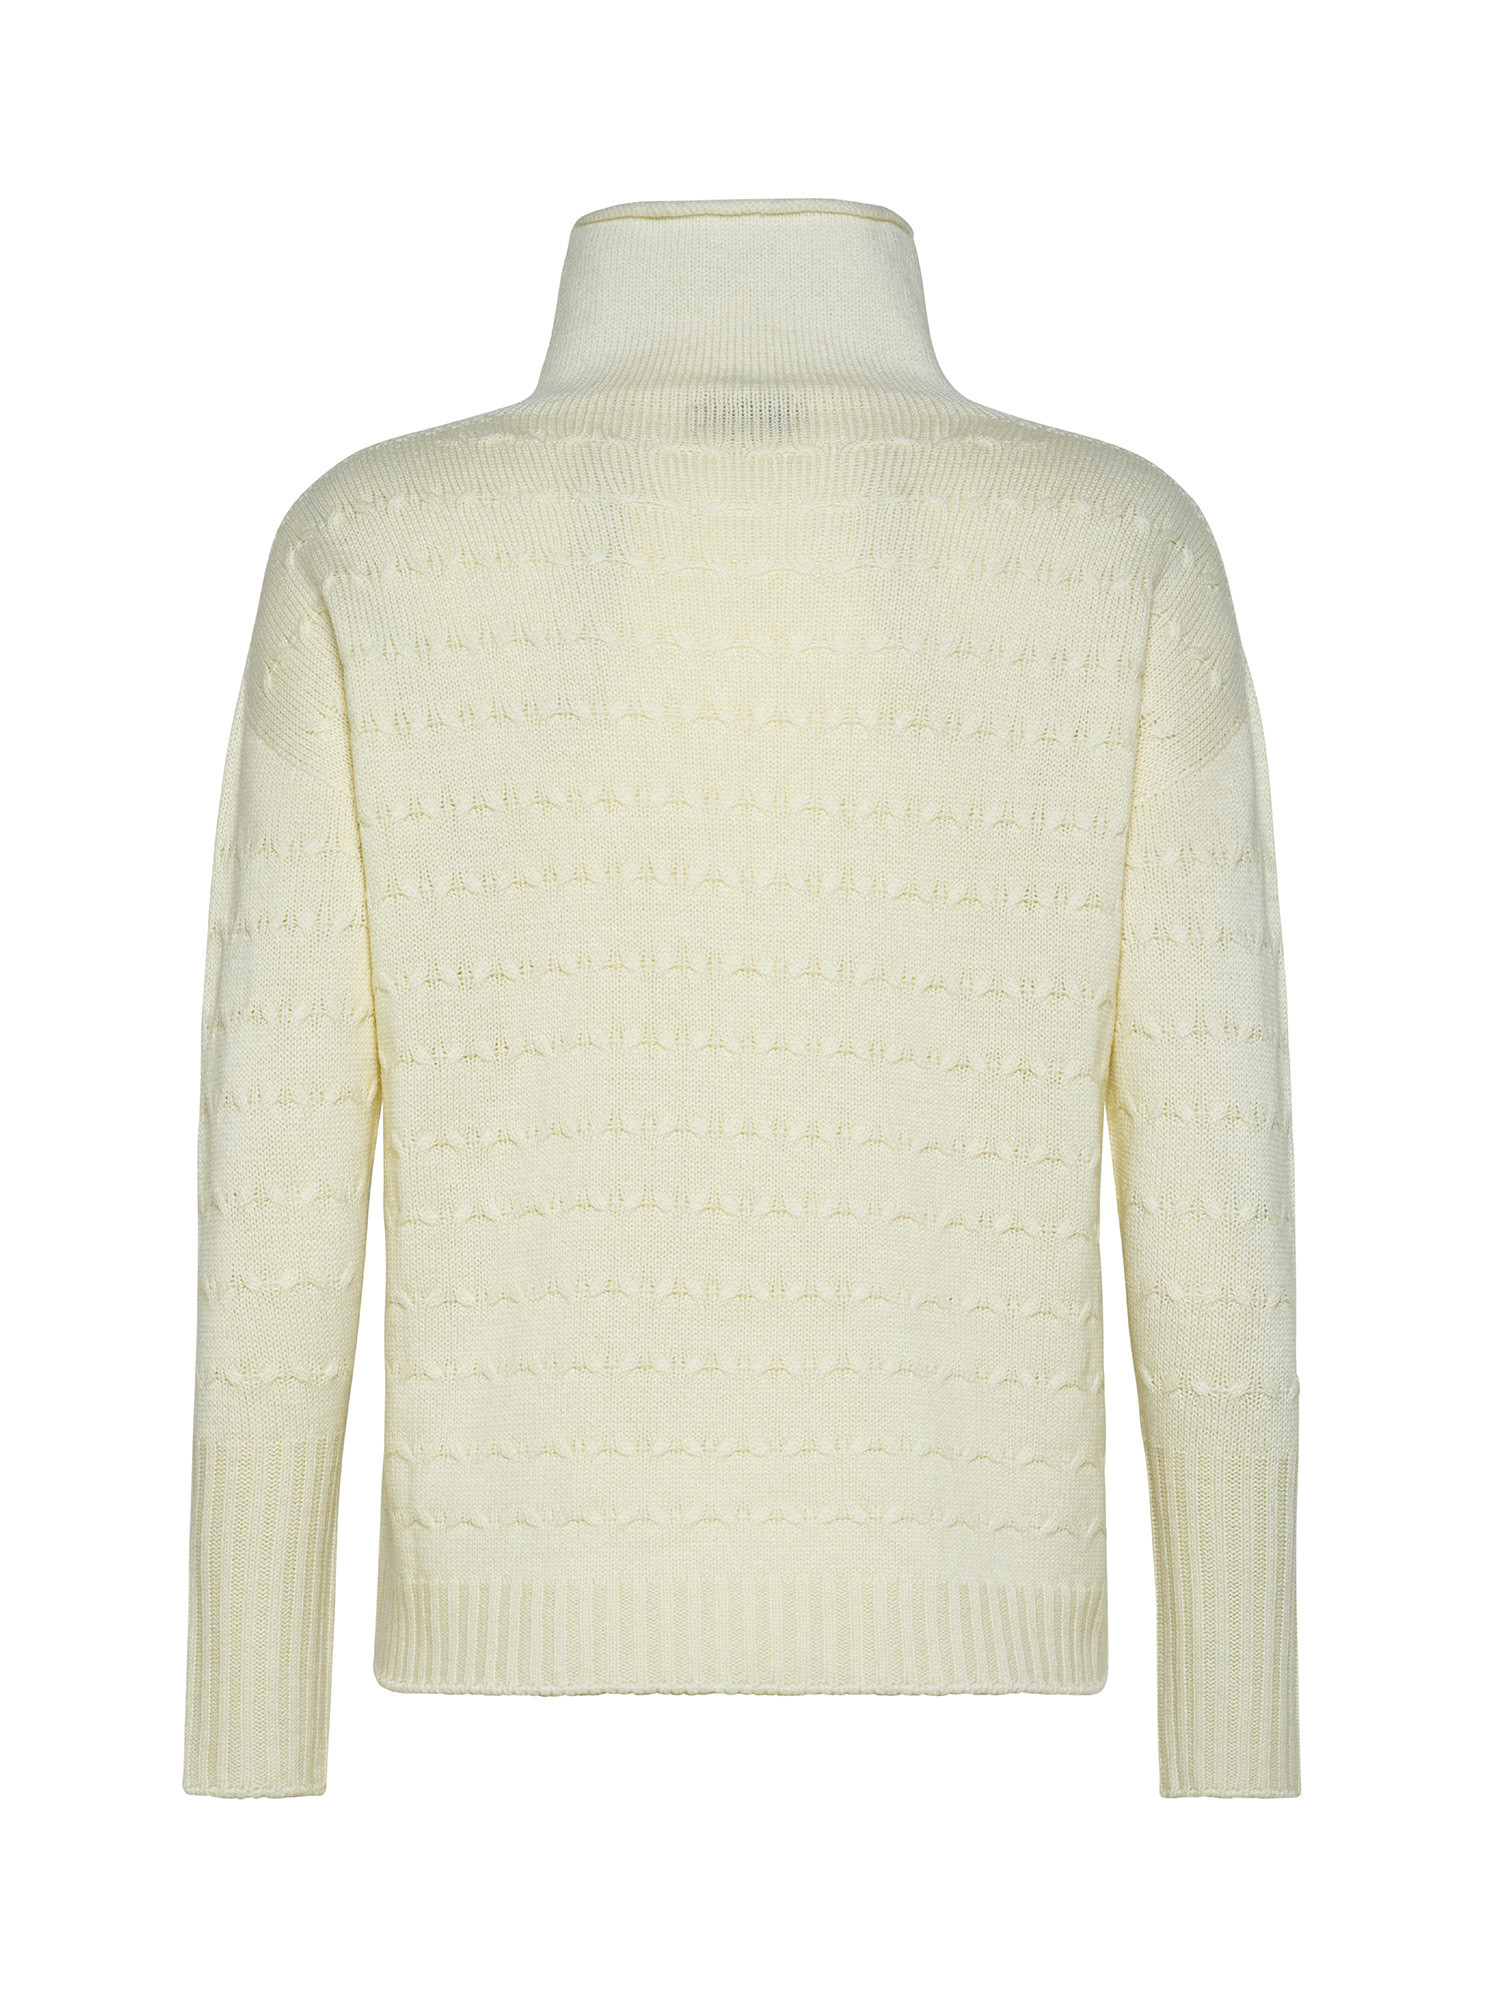 K Collection - Knitted turtleneck pullover, Ecru, large image number 1